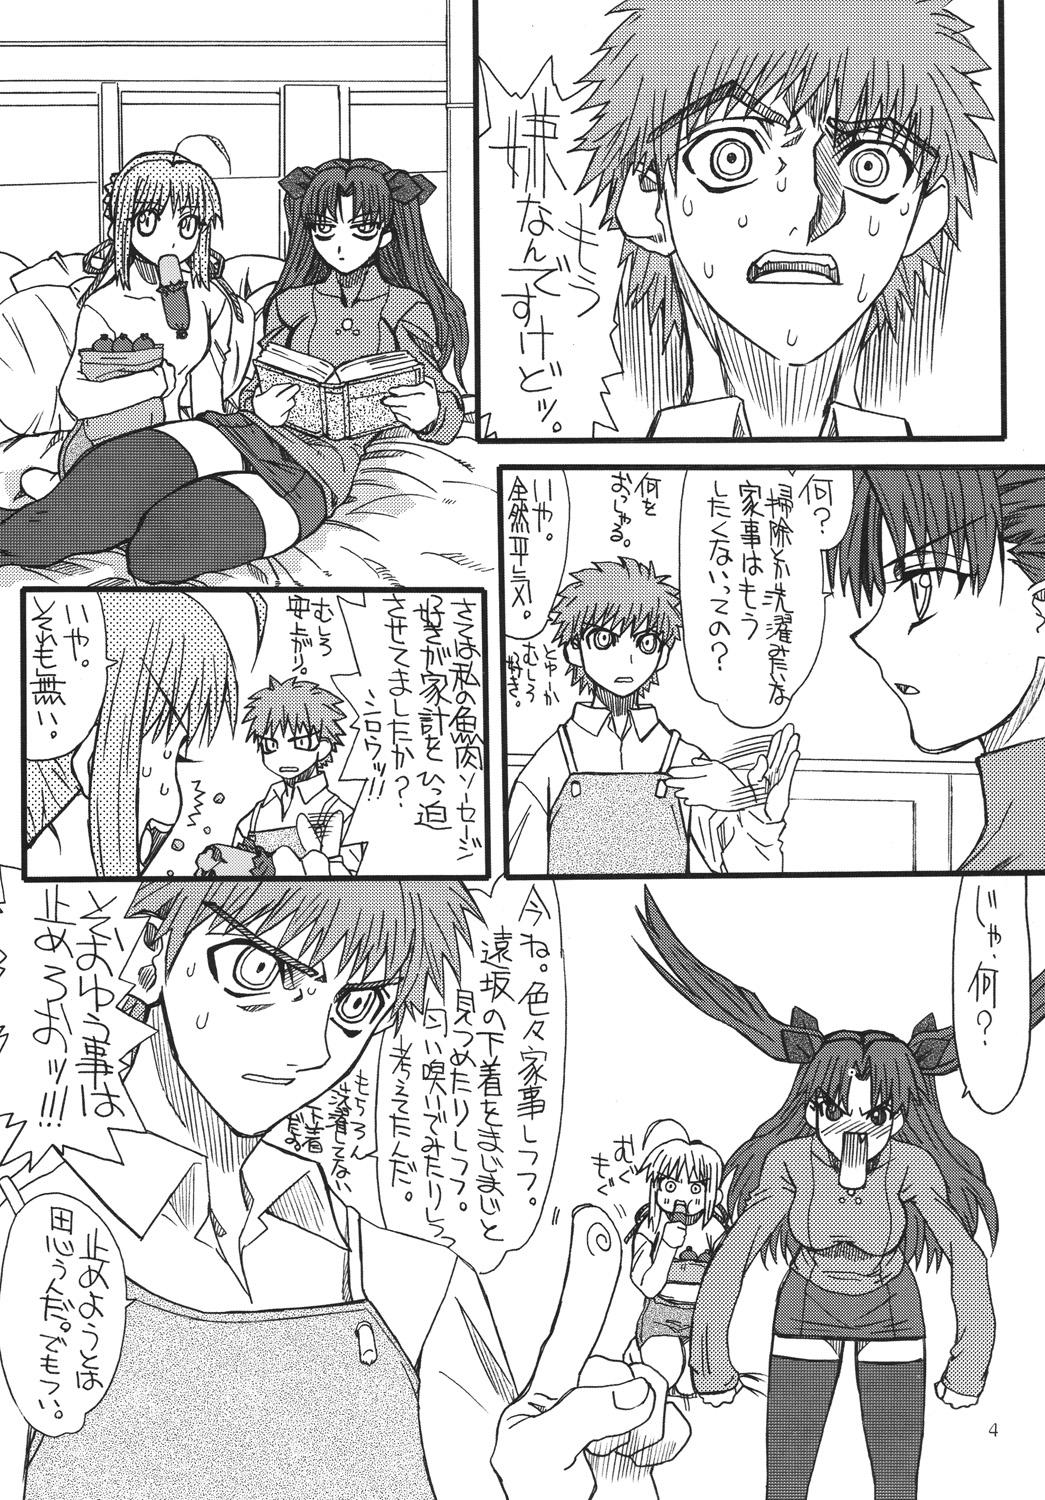 Story Kurenai Hoppe 2 - Fate stay night 8teenxxx - Page 3